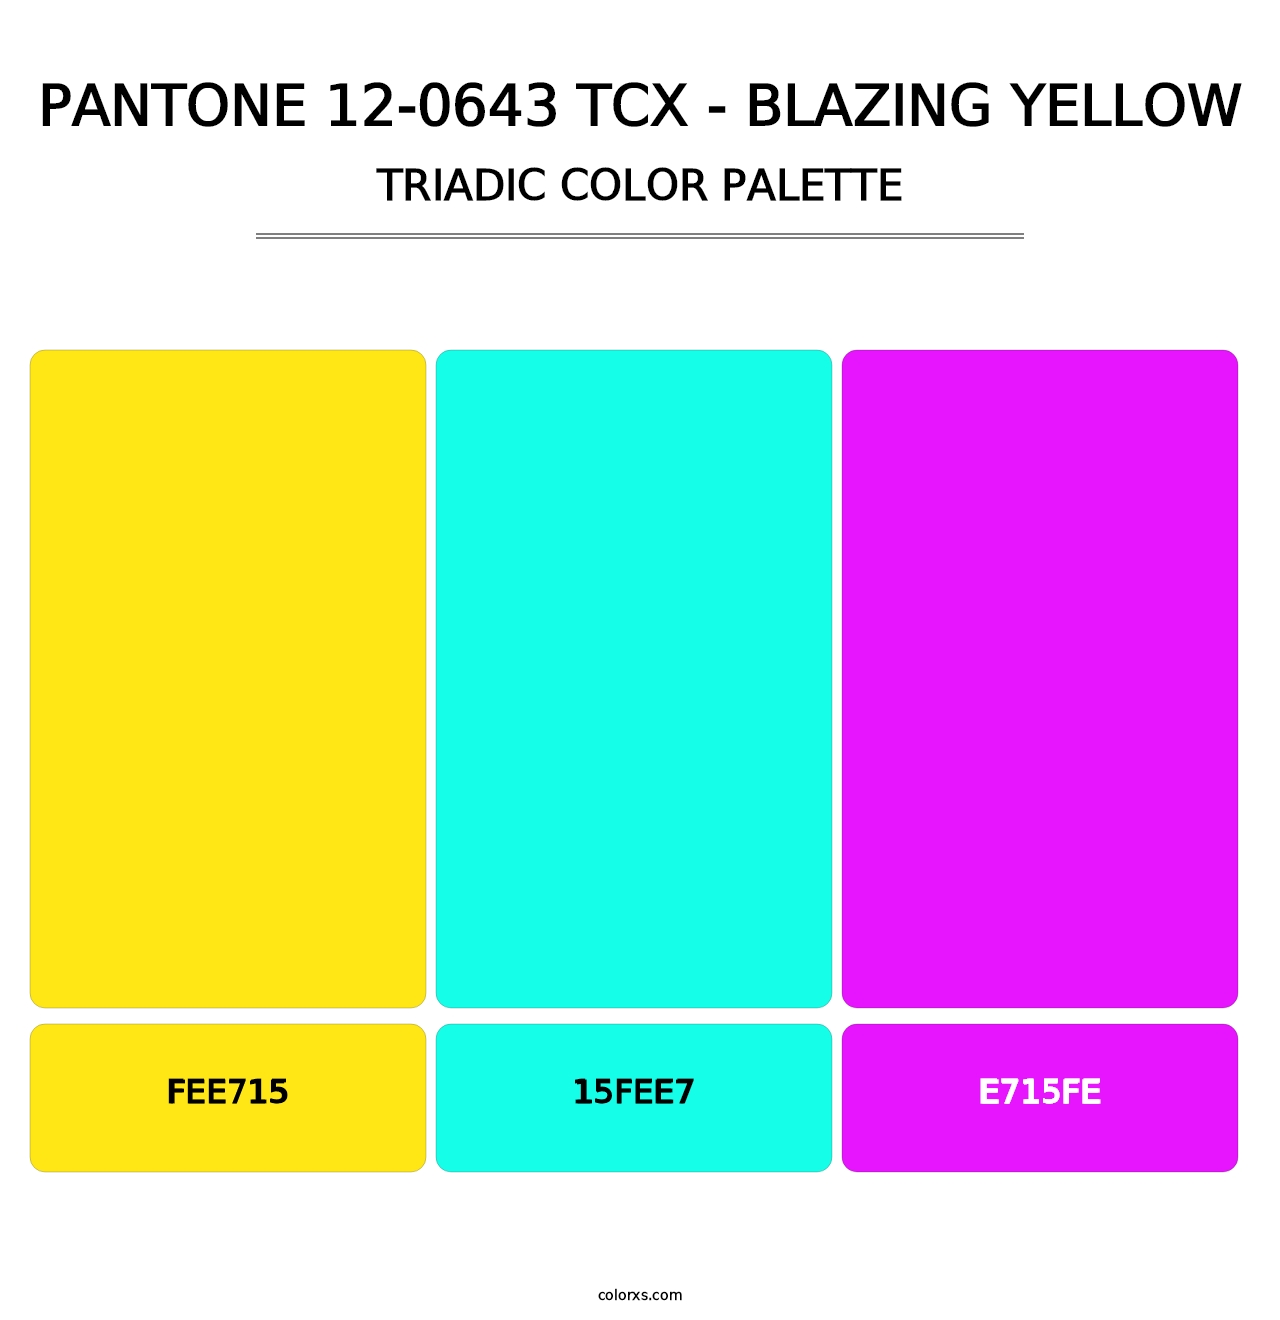 PANTONE 12-0643 TCX - Blazing Yellow - Triadic Color Palette